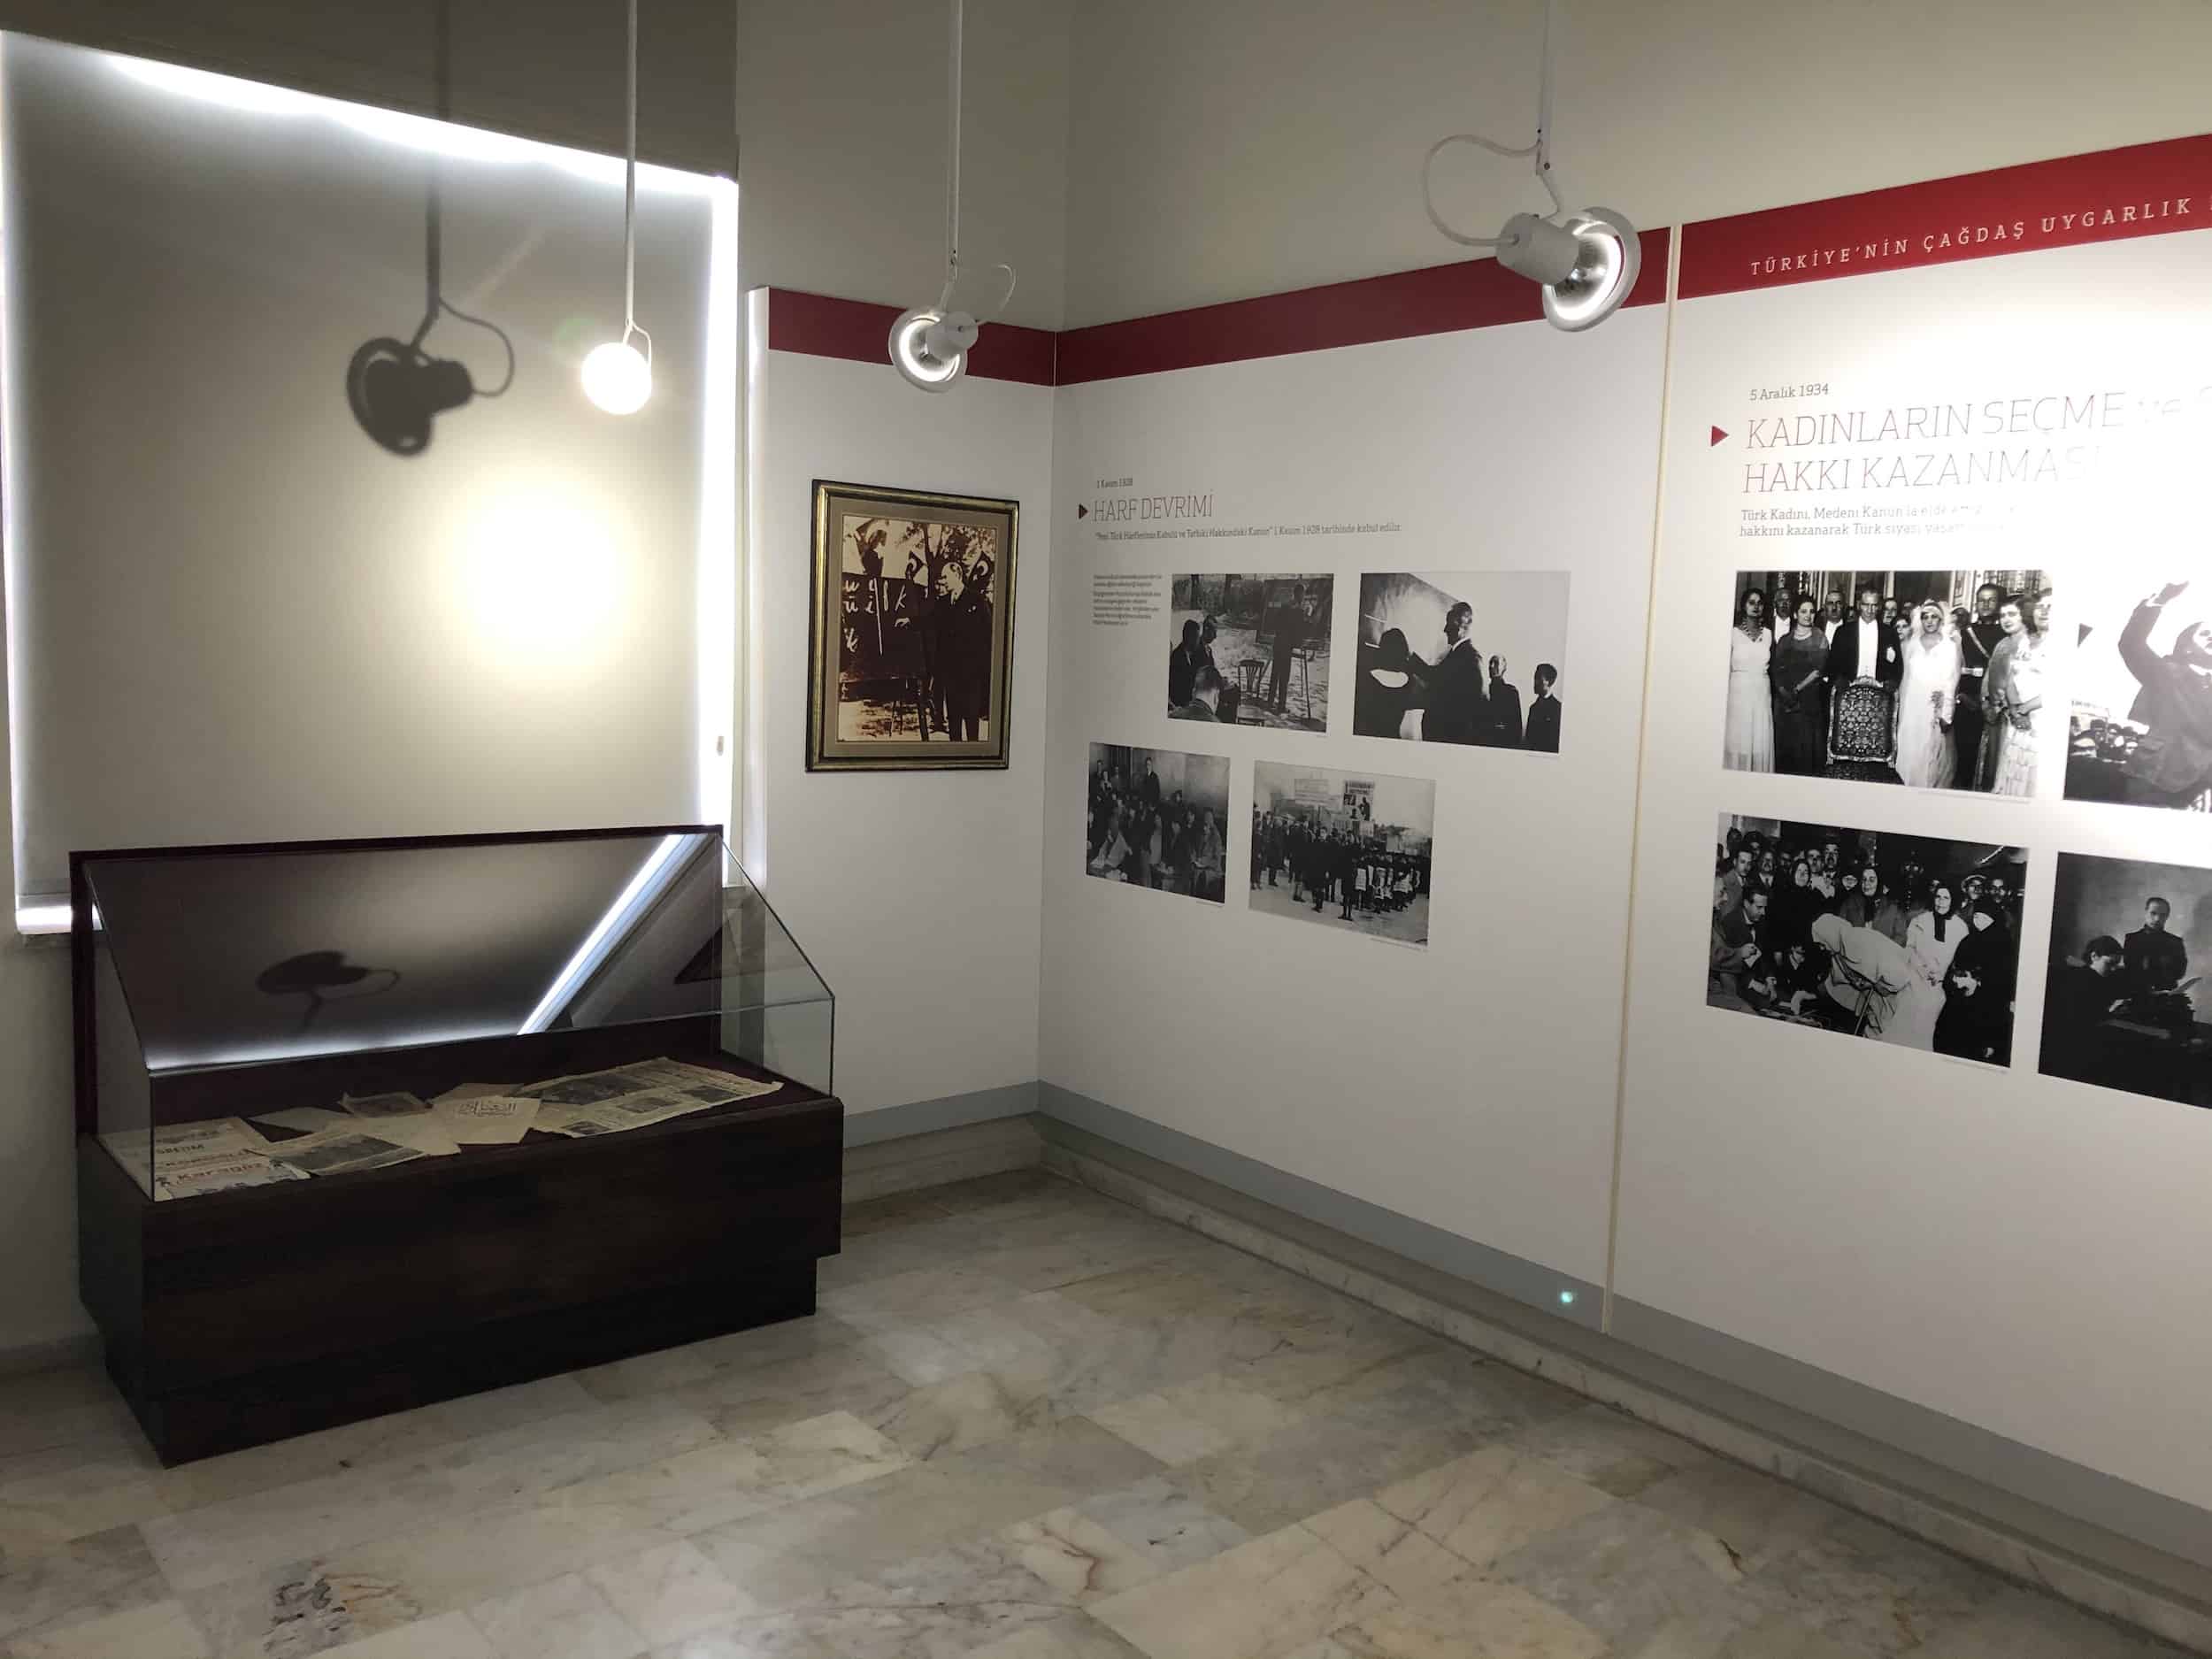 Atatürk's reforms gallery at the Anadolu University Republic History Museum